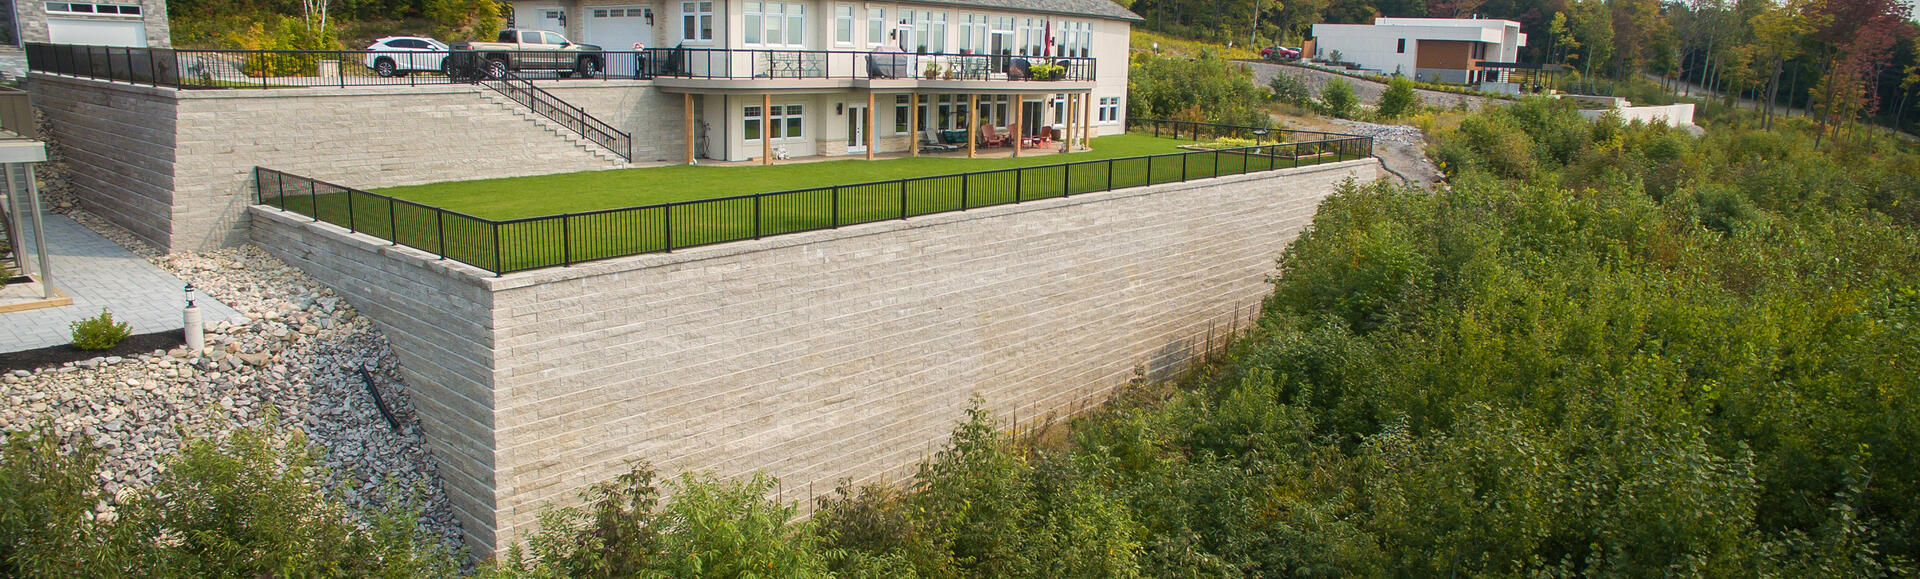 Backyard wall using Proterra™ Split product from Brampton Brick